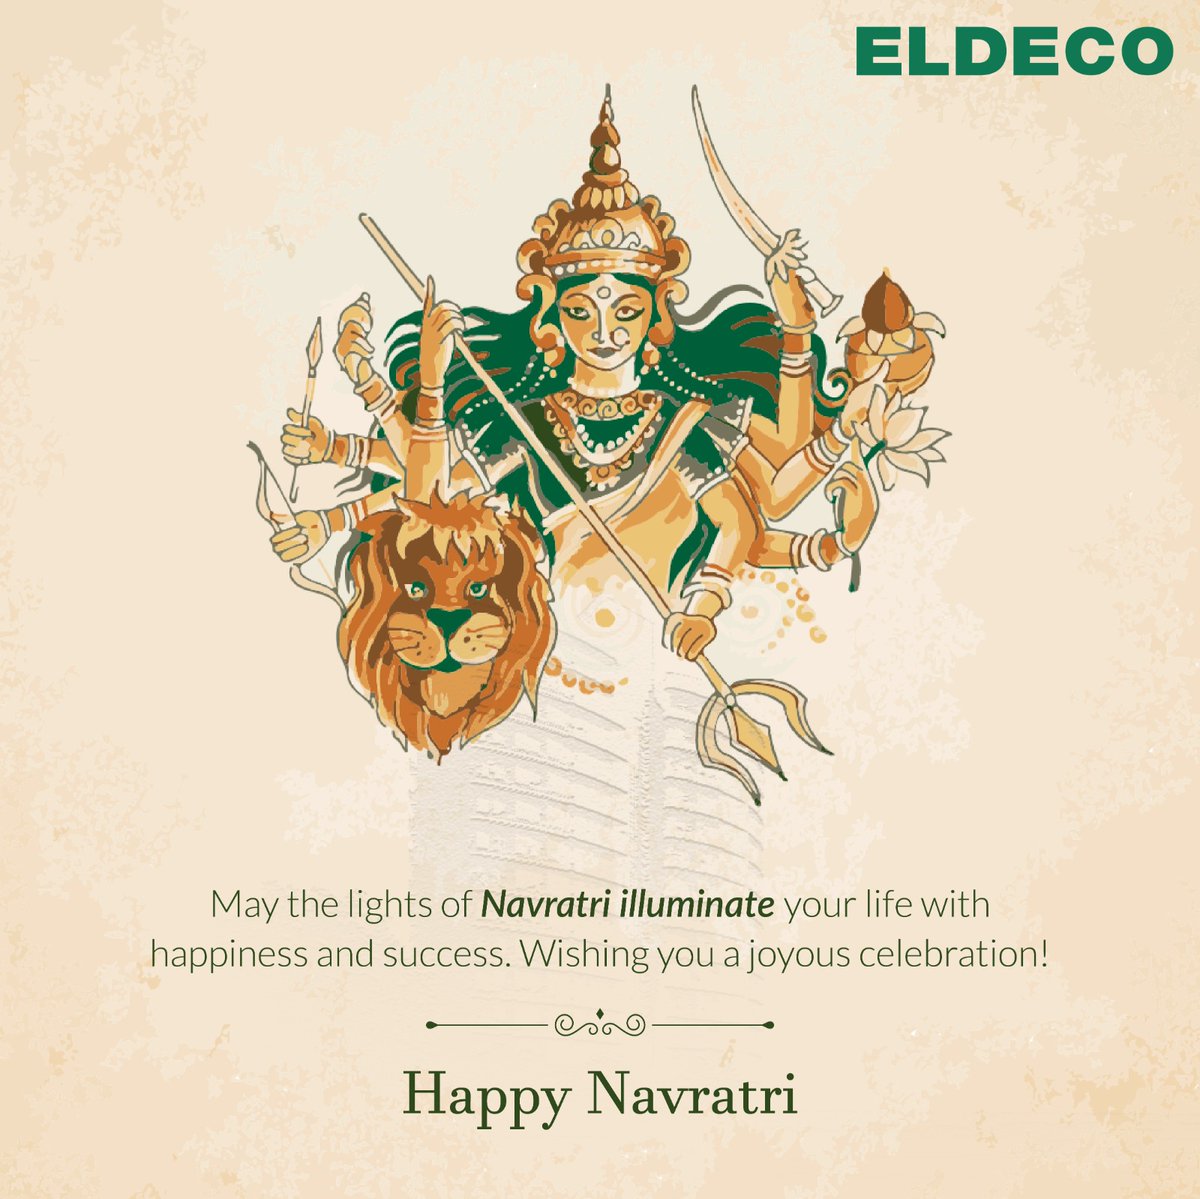 May the lights of Navratri illuminate your life with happiness and success. Happy Navratri! #Eldeco #EldecoGroup #Navratri #Festival #Celebration